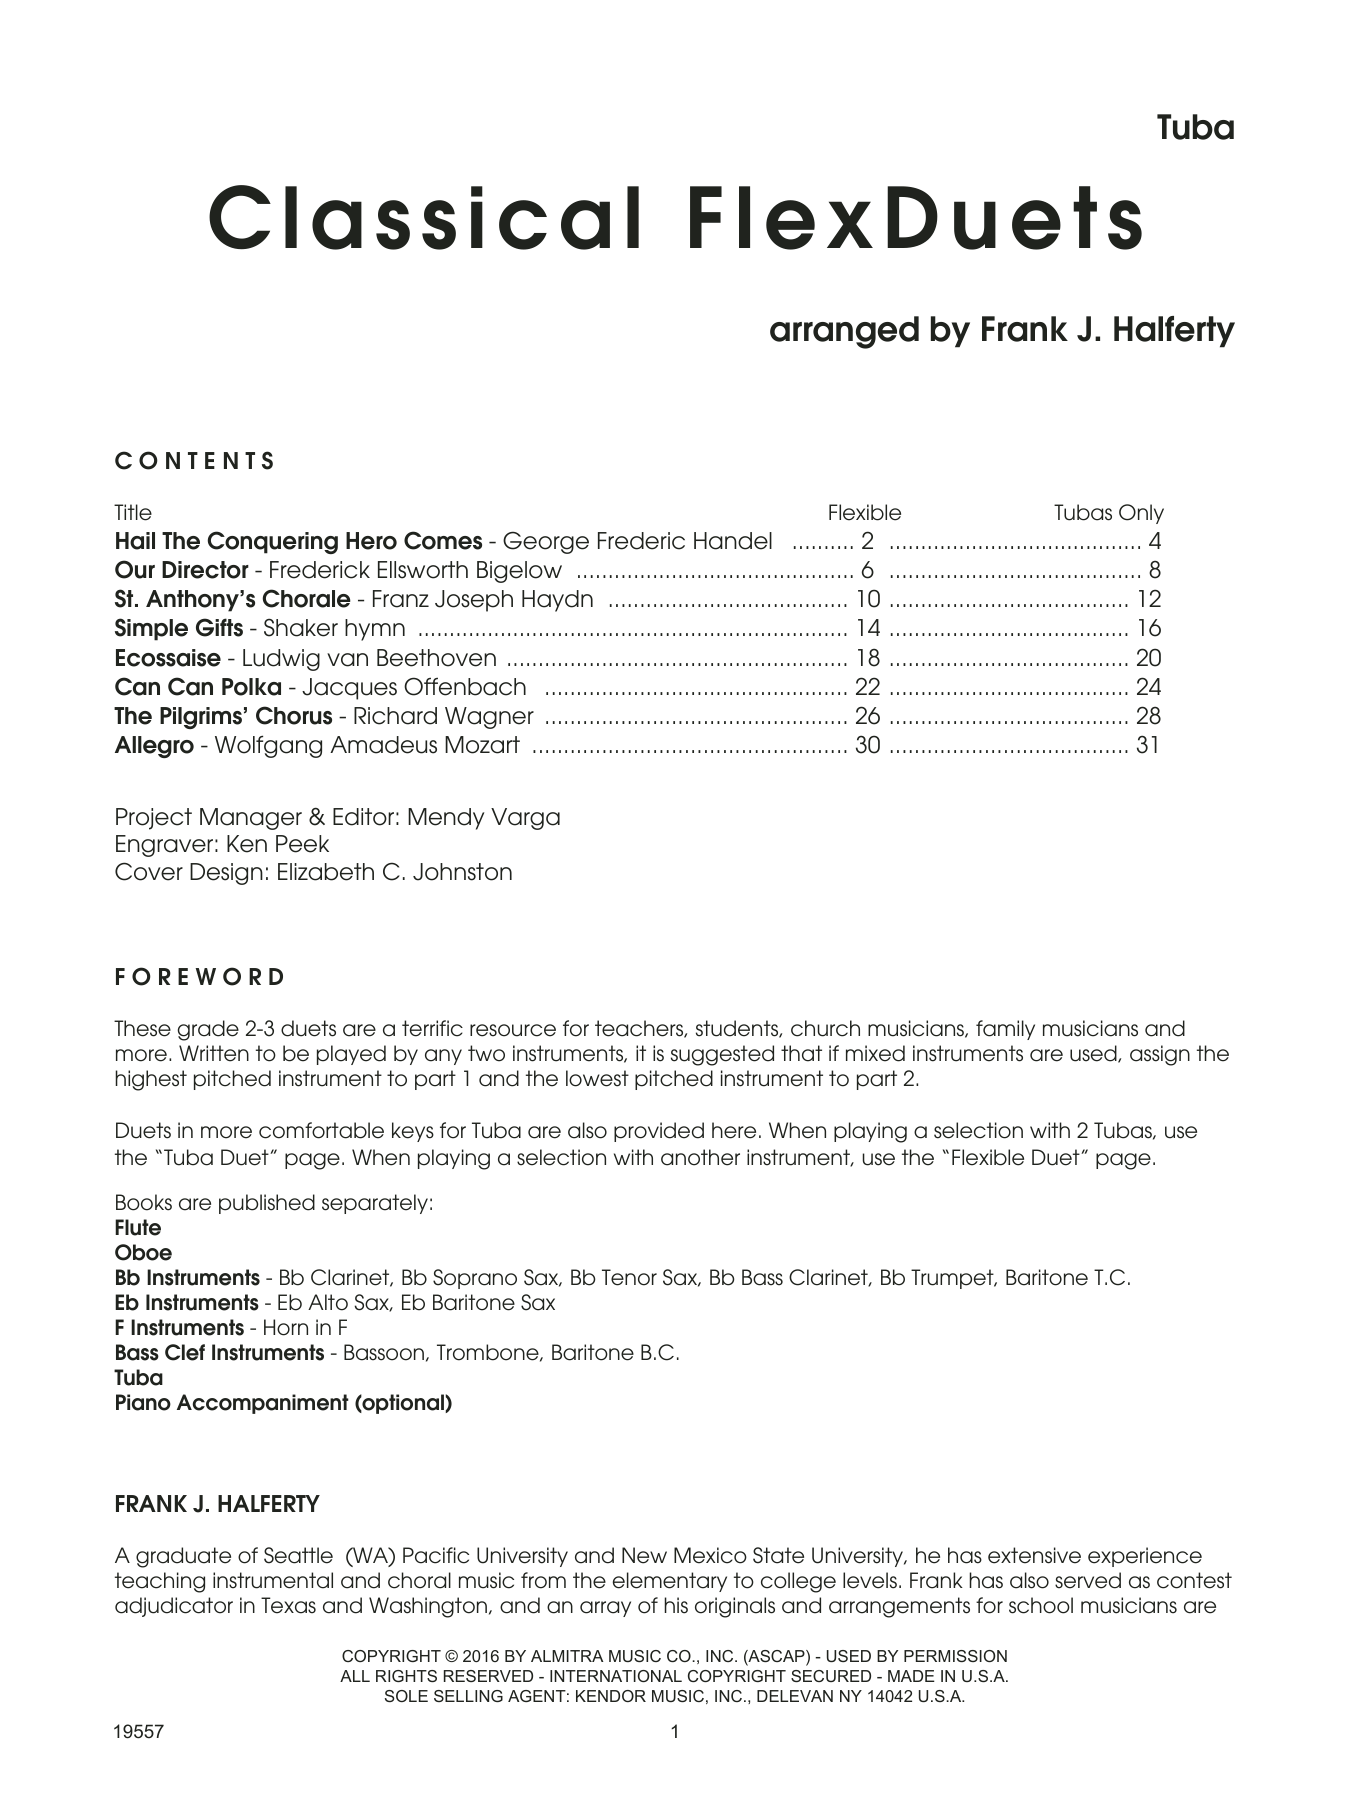 Download Frank J. Halferty Classical FlexDuets - Tuba Sheet Music